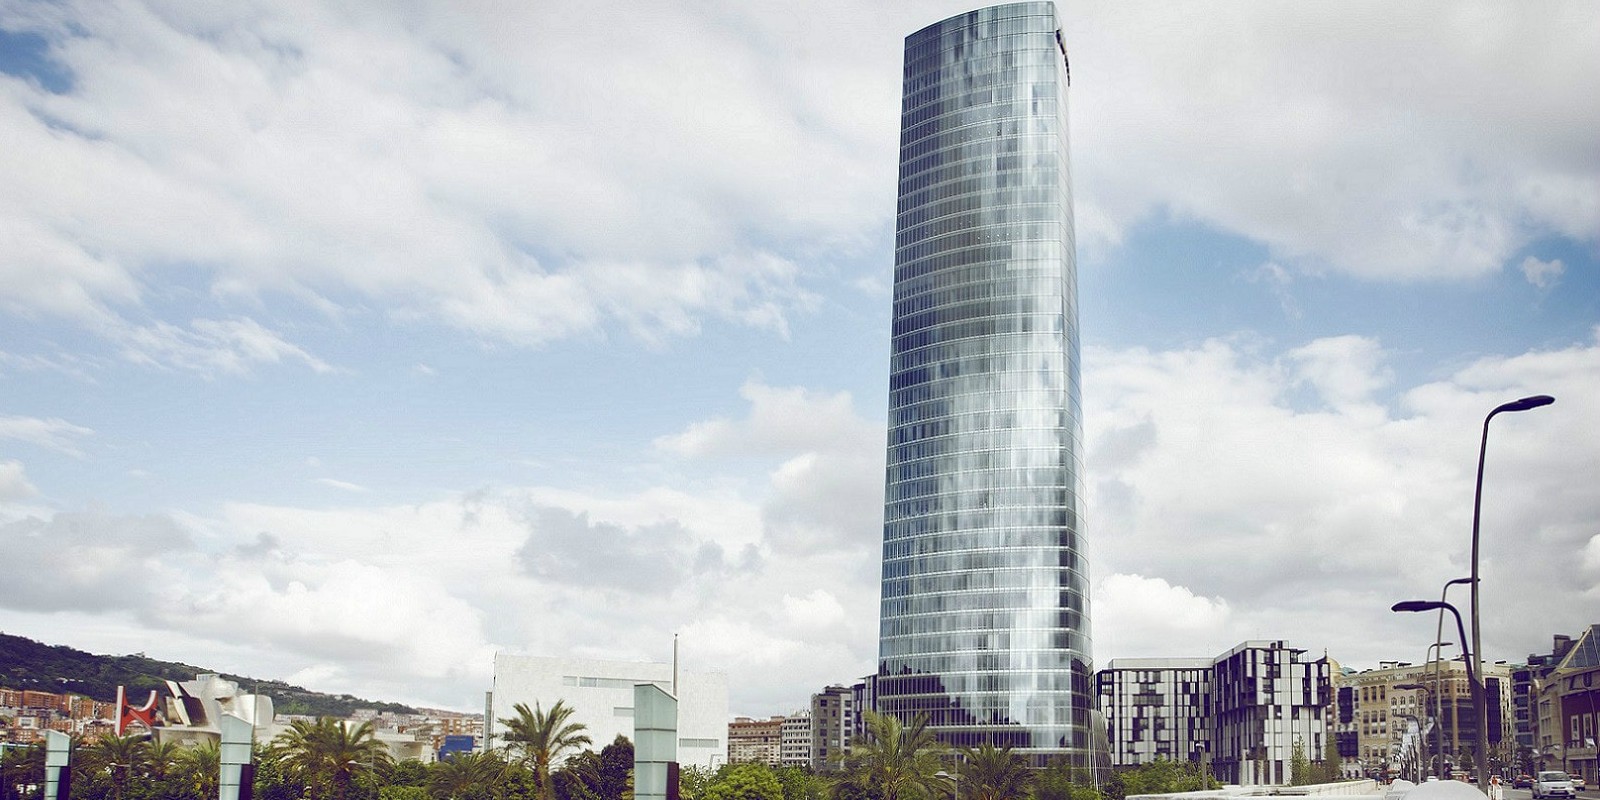 Torre_Iberdrola_building_design_CFD_studies_ADA_Idom